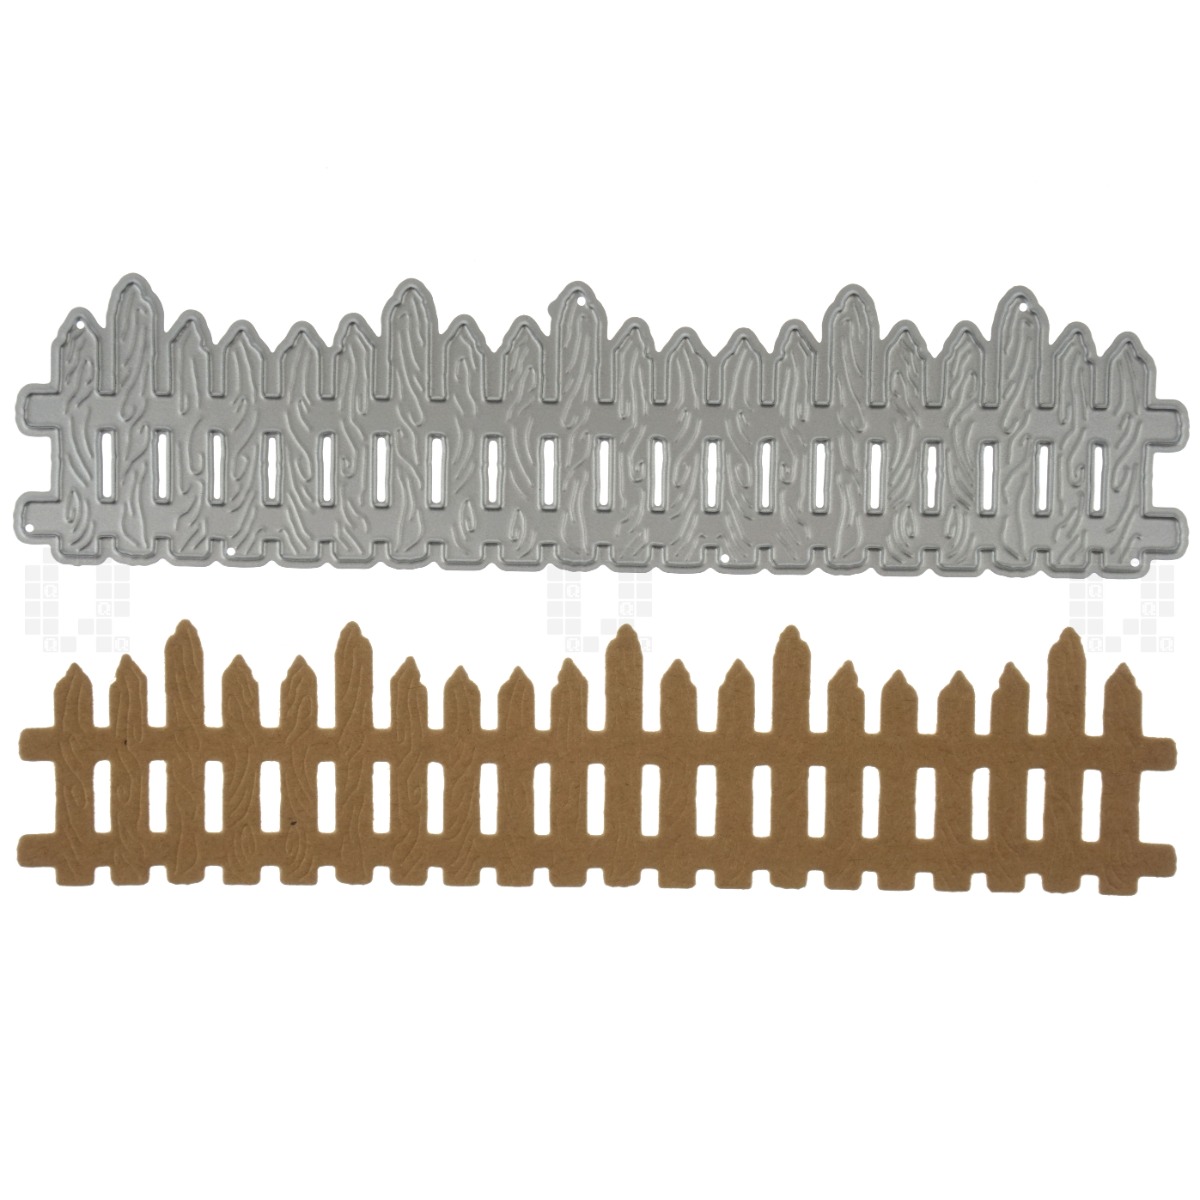 Textured Wood Slat Fence Metal Cutting Die